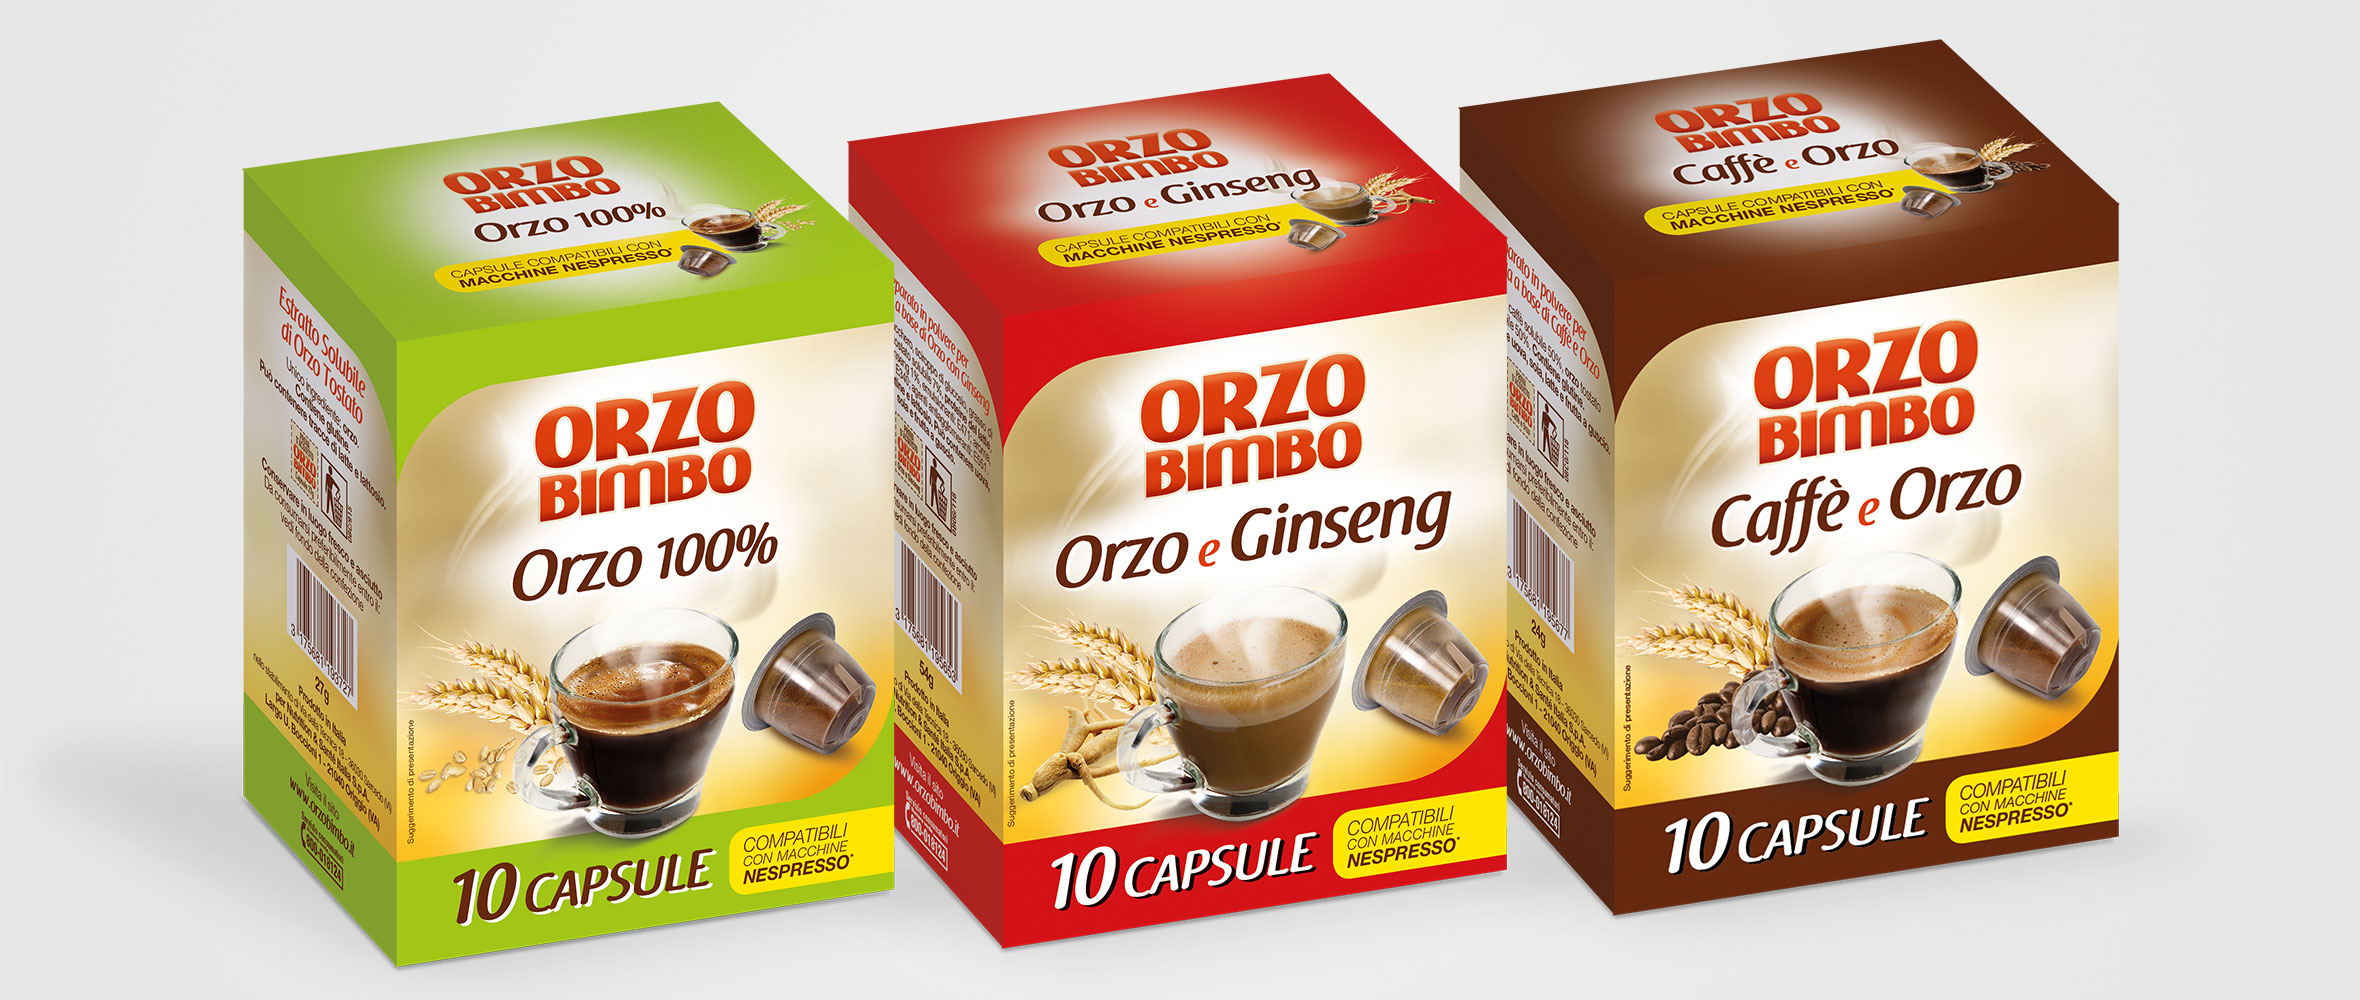 orzo-bimbo-packaging